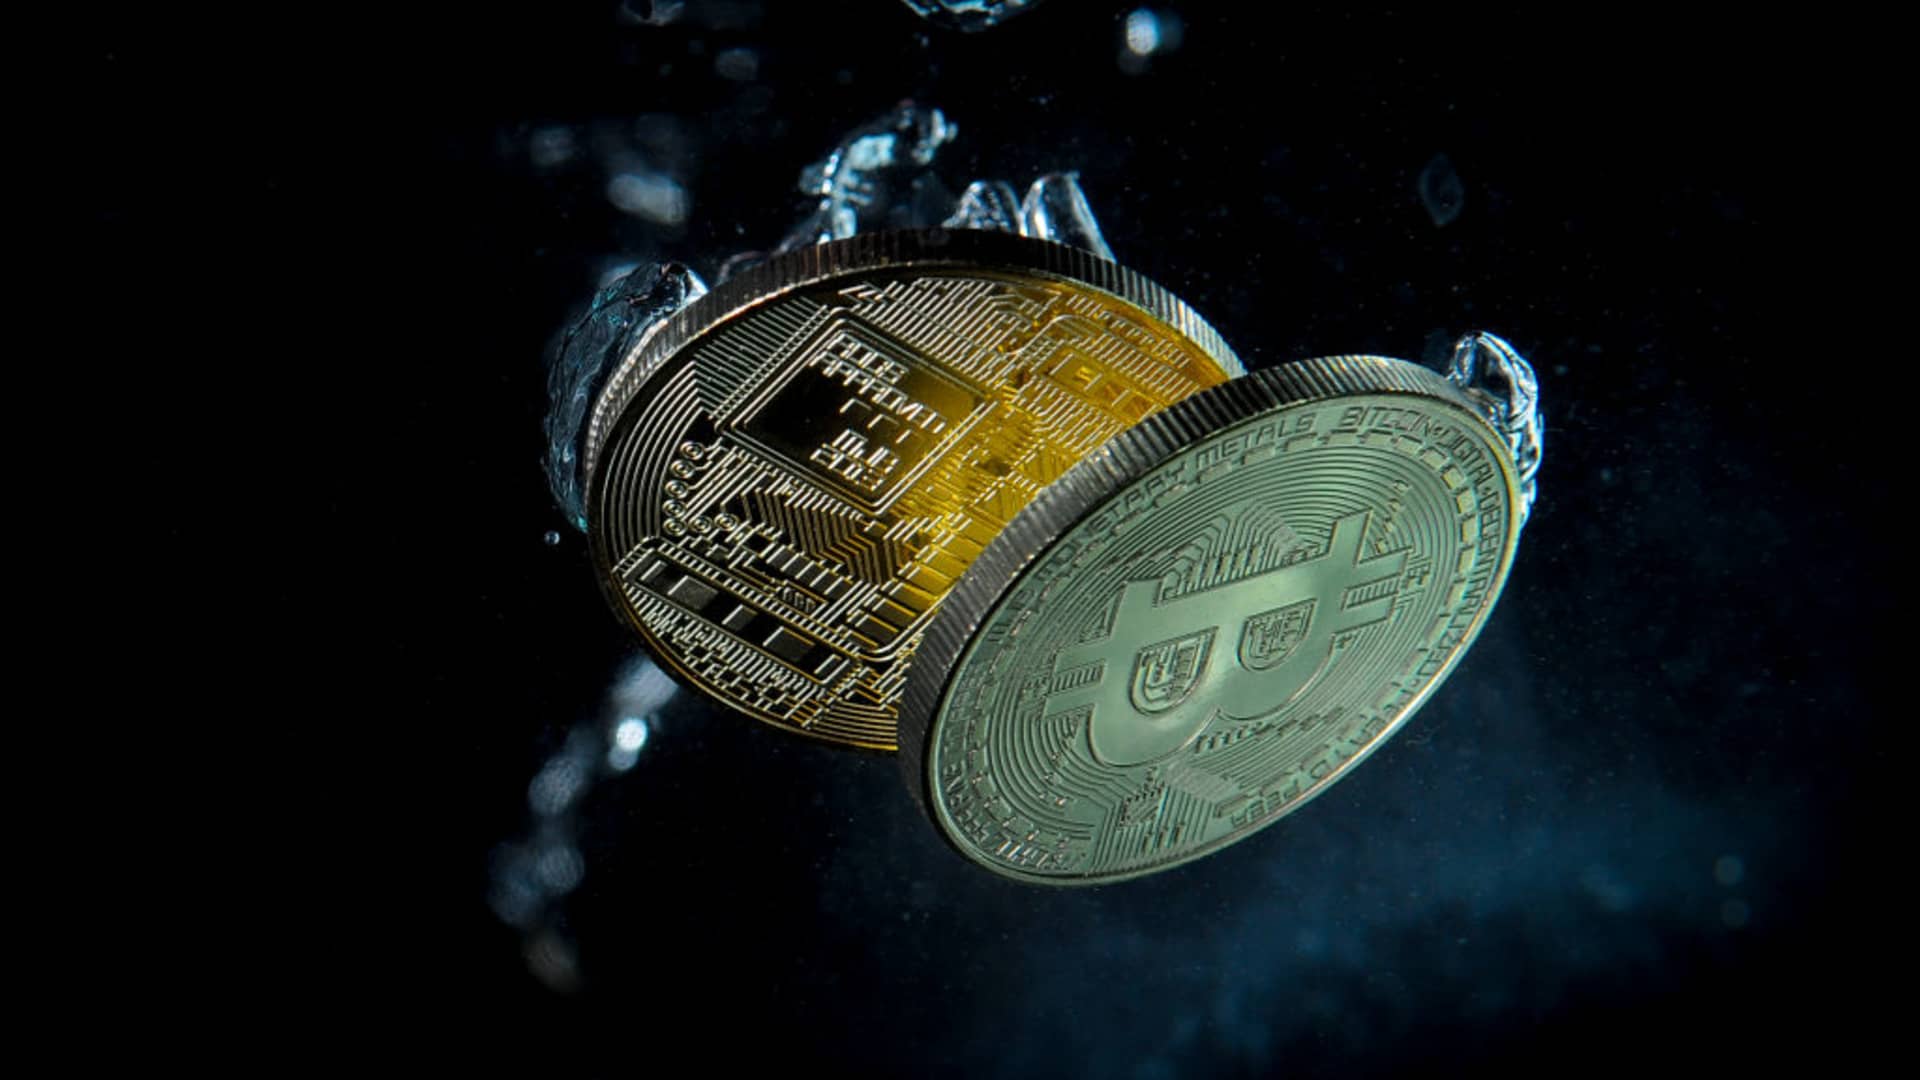 Bitcoin drops below key $9,000 level on Coinbase